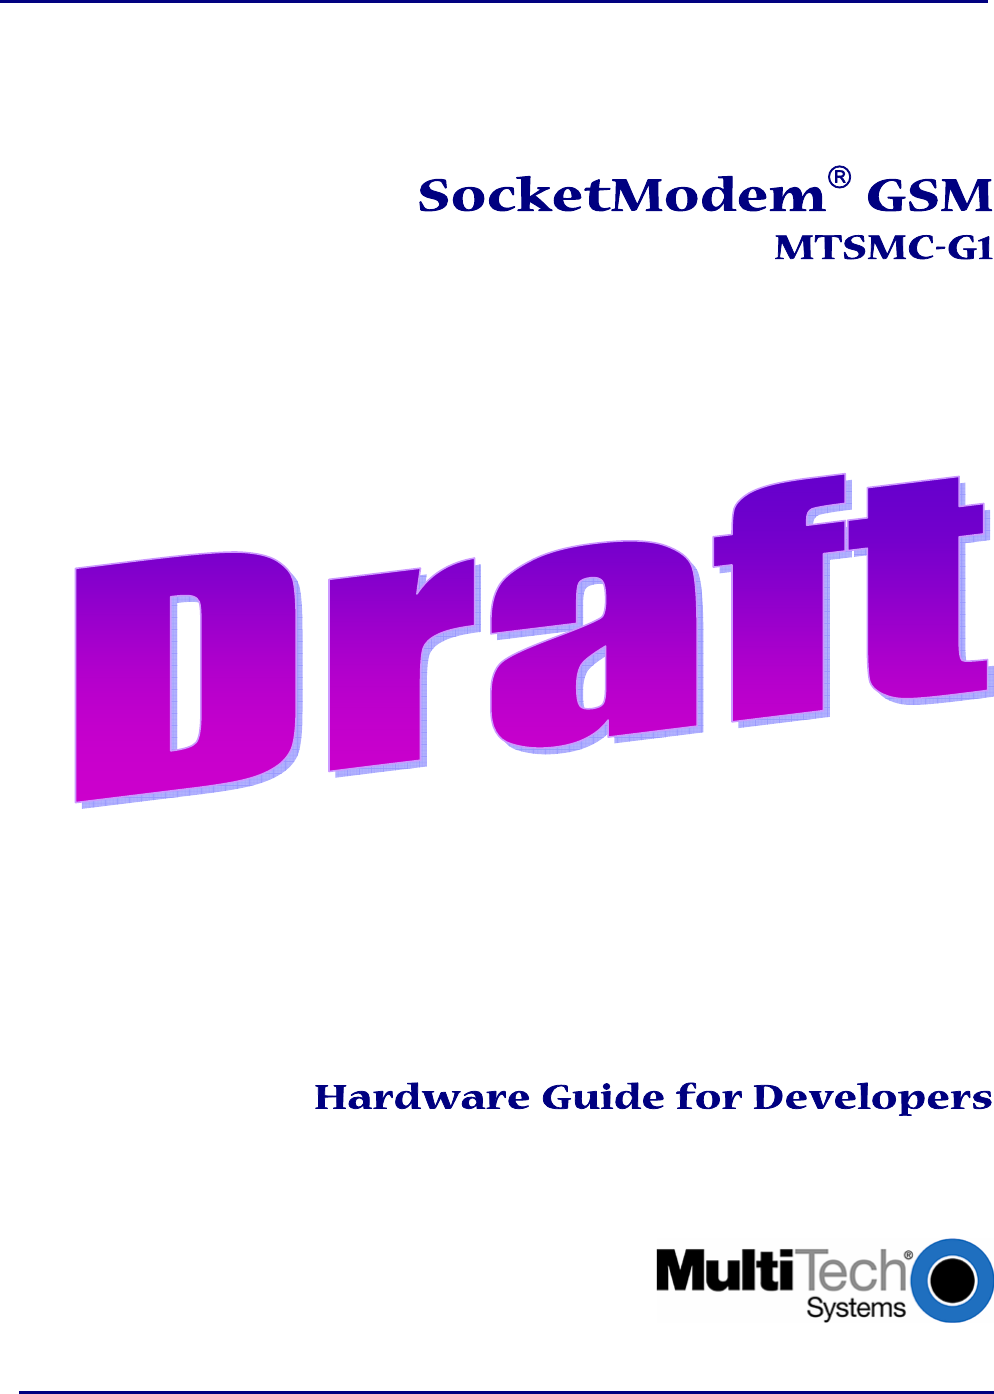            SocketModem® GSM MTSMC-G1                 Hardware Guide for Developers       